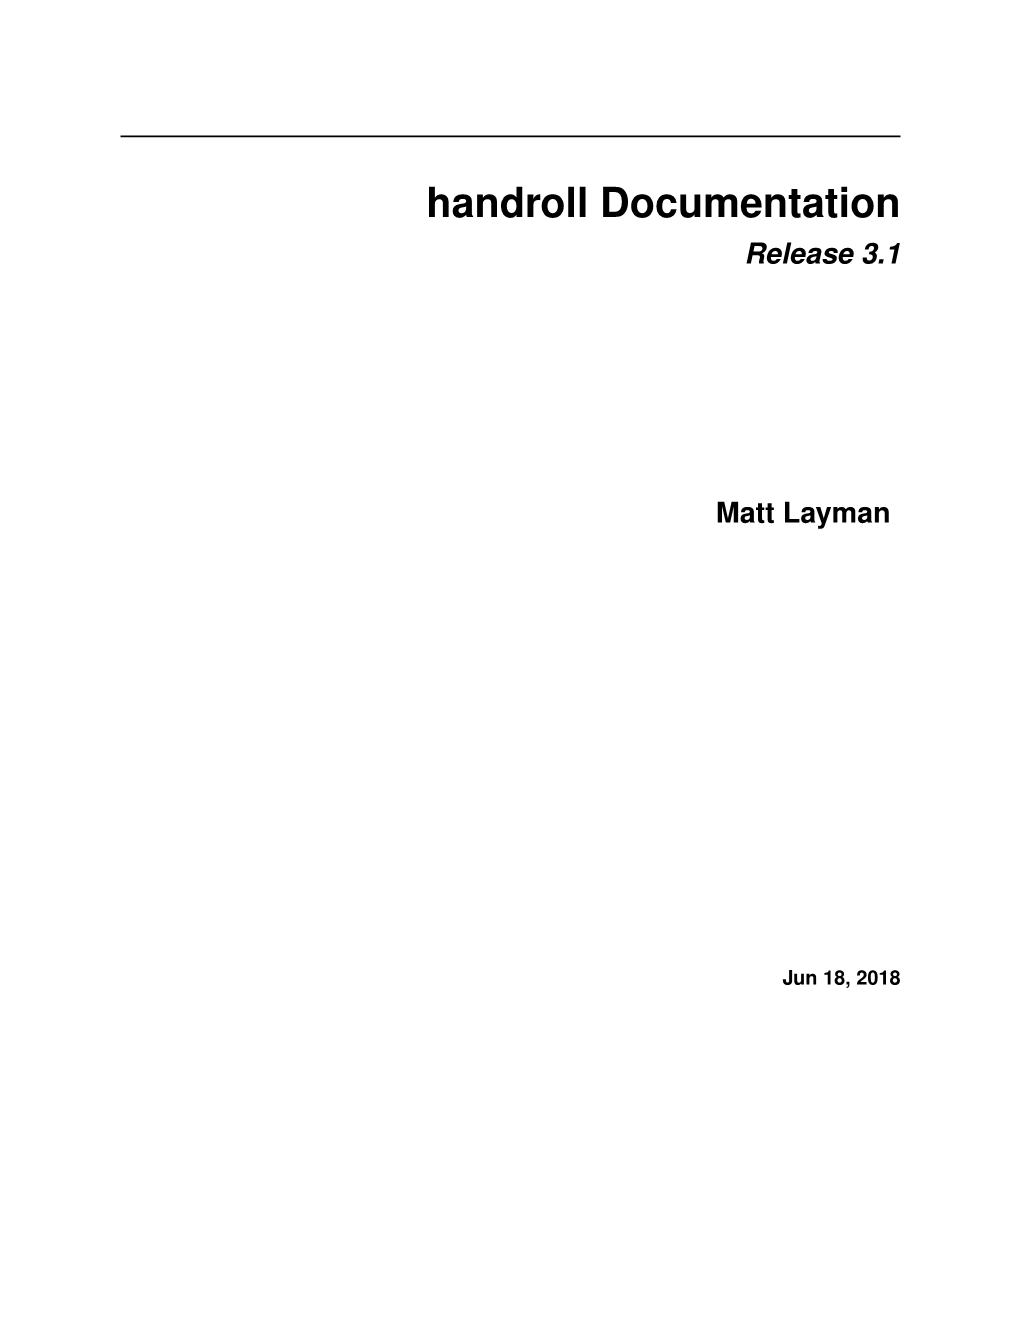 Handroll Documentation Release 3.1